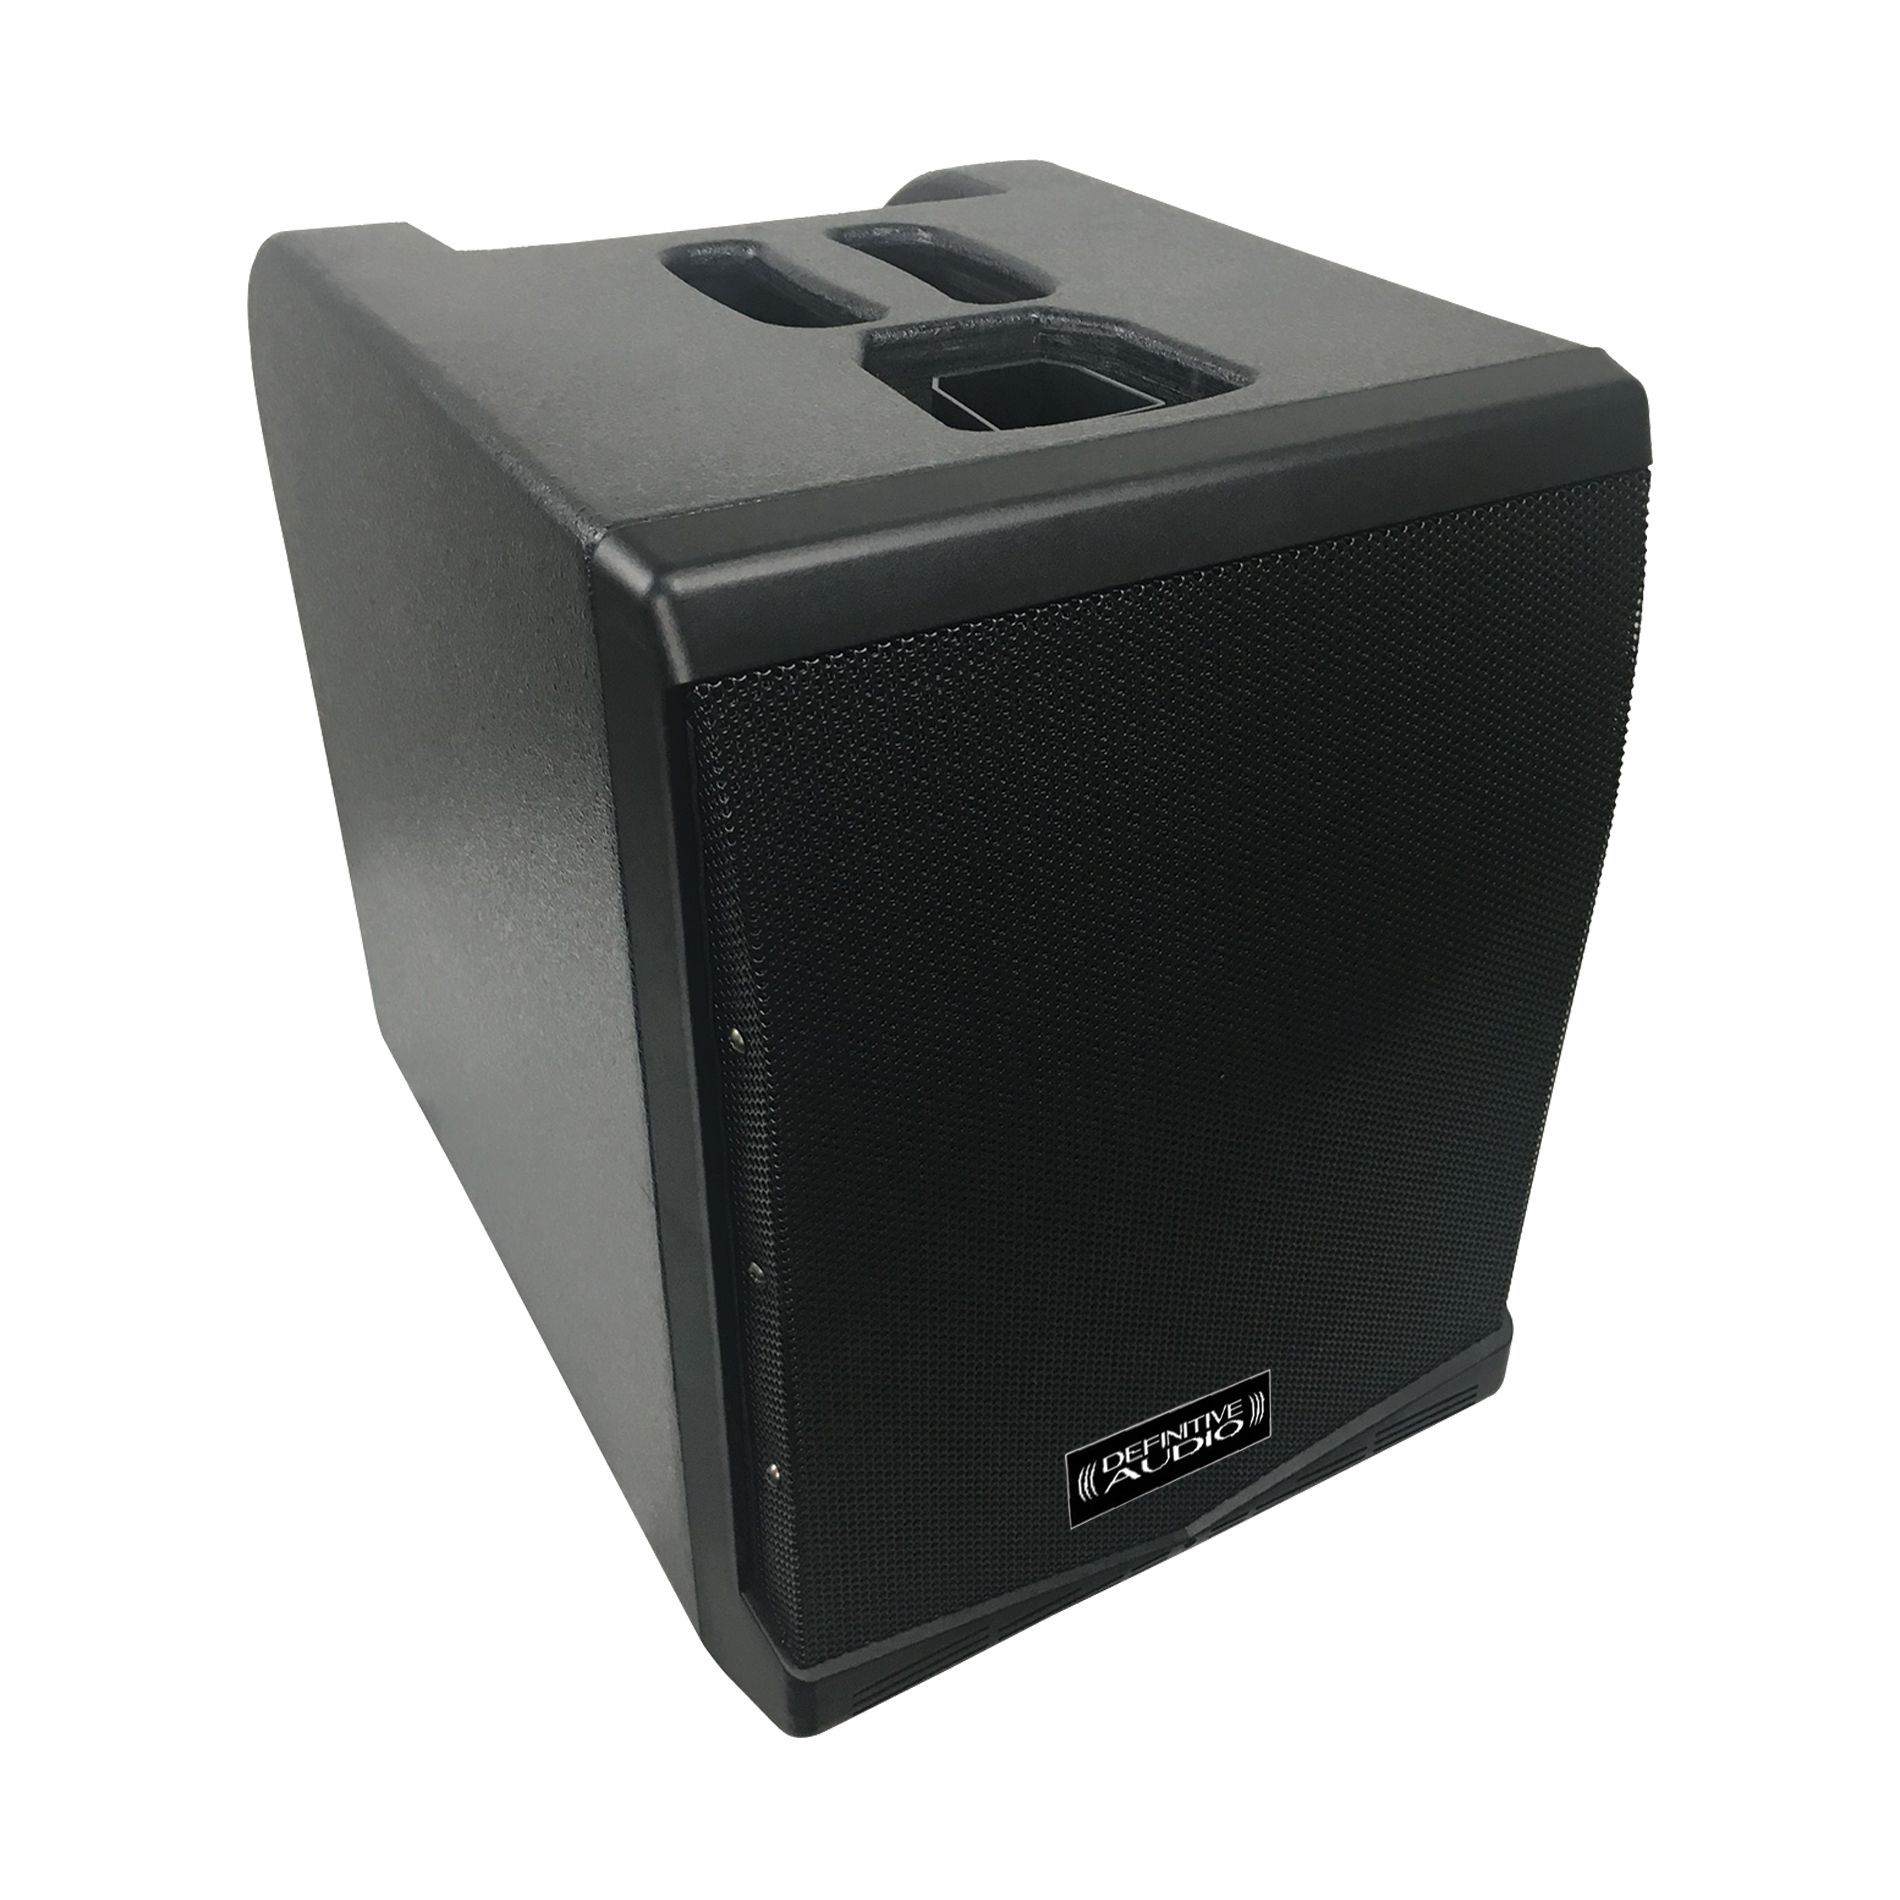 Definitive Audio Vortex 500 L1 - Systemes Colonnes - Variation 3